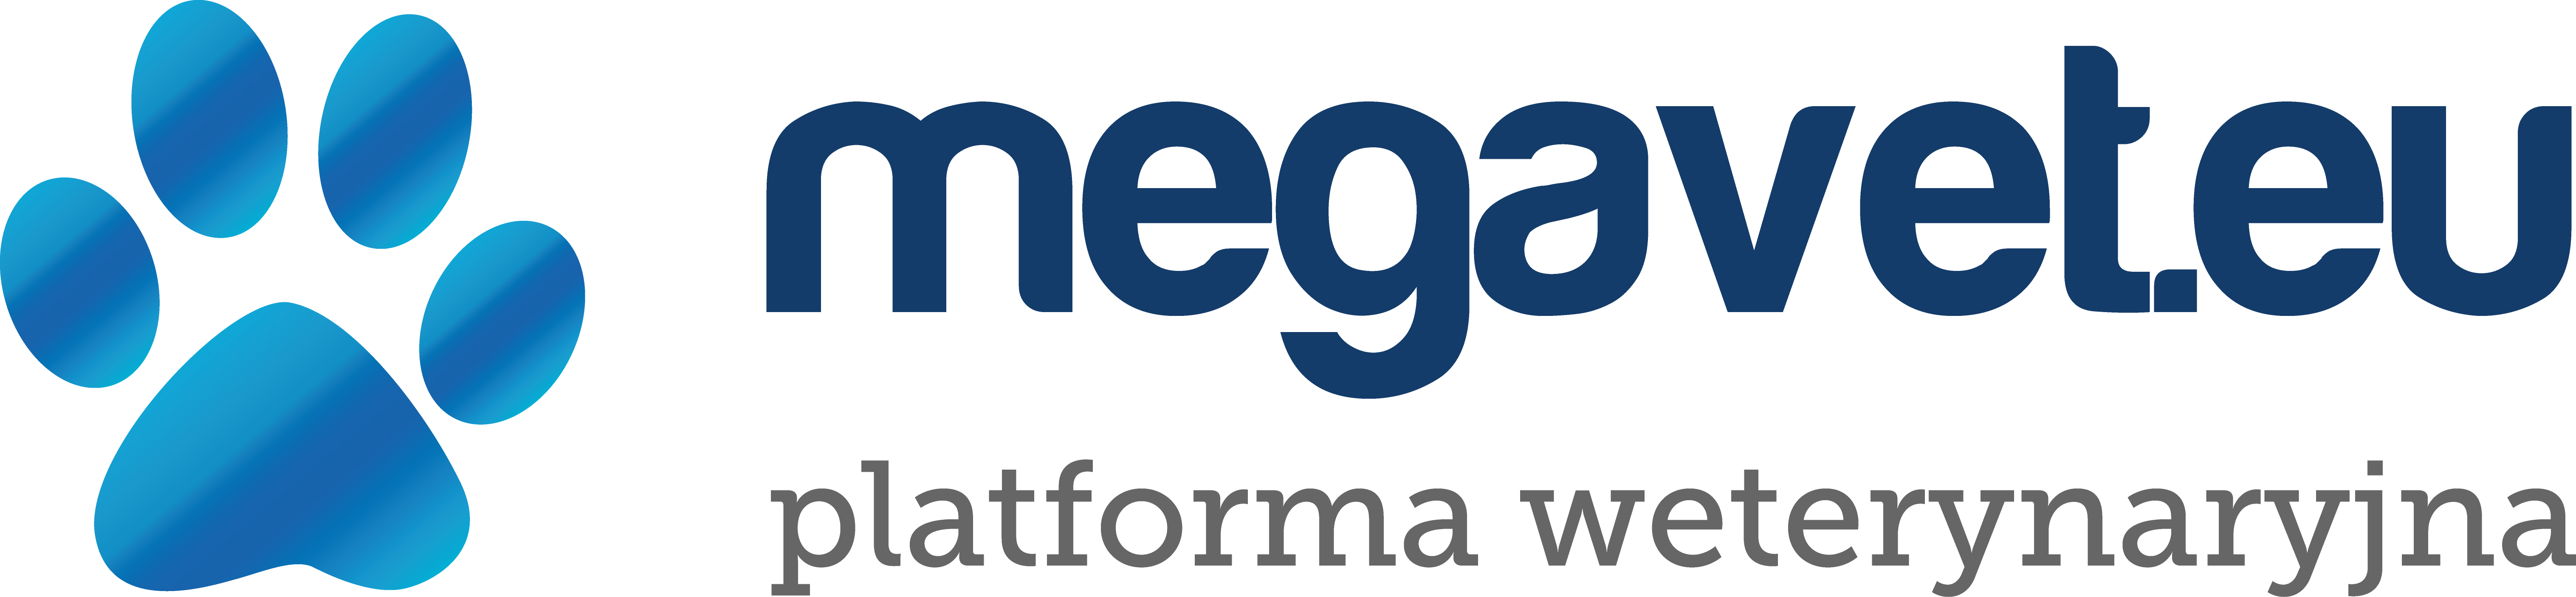  megavet.eu - veterinary platform 